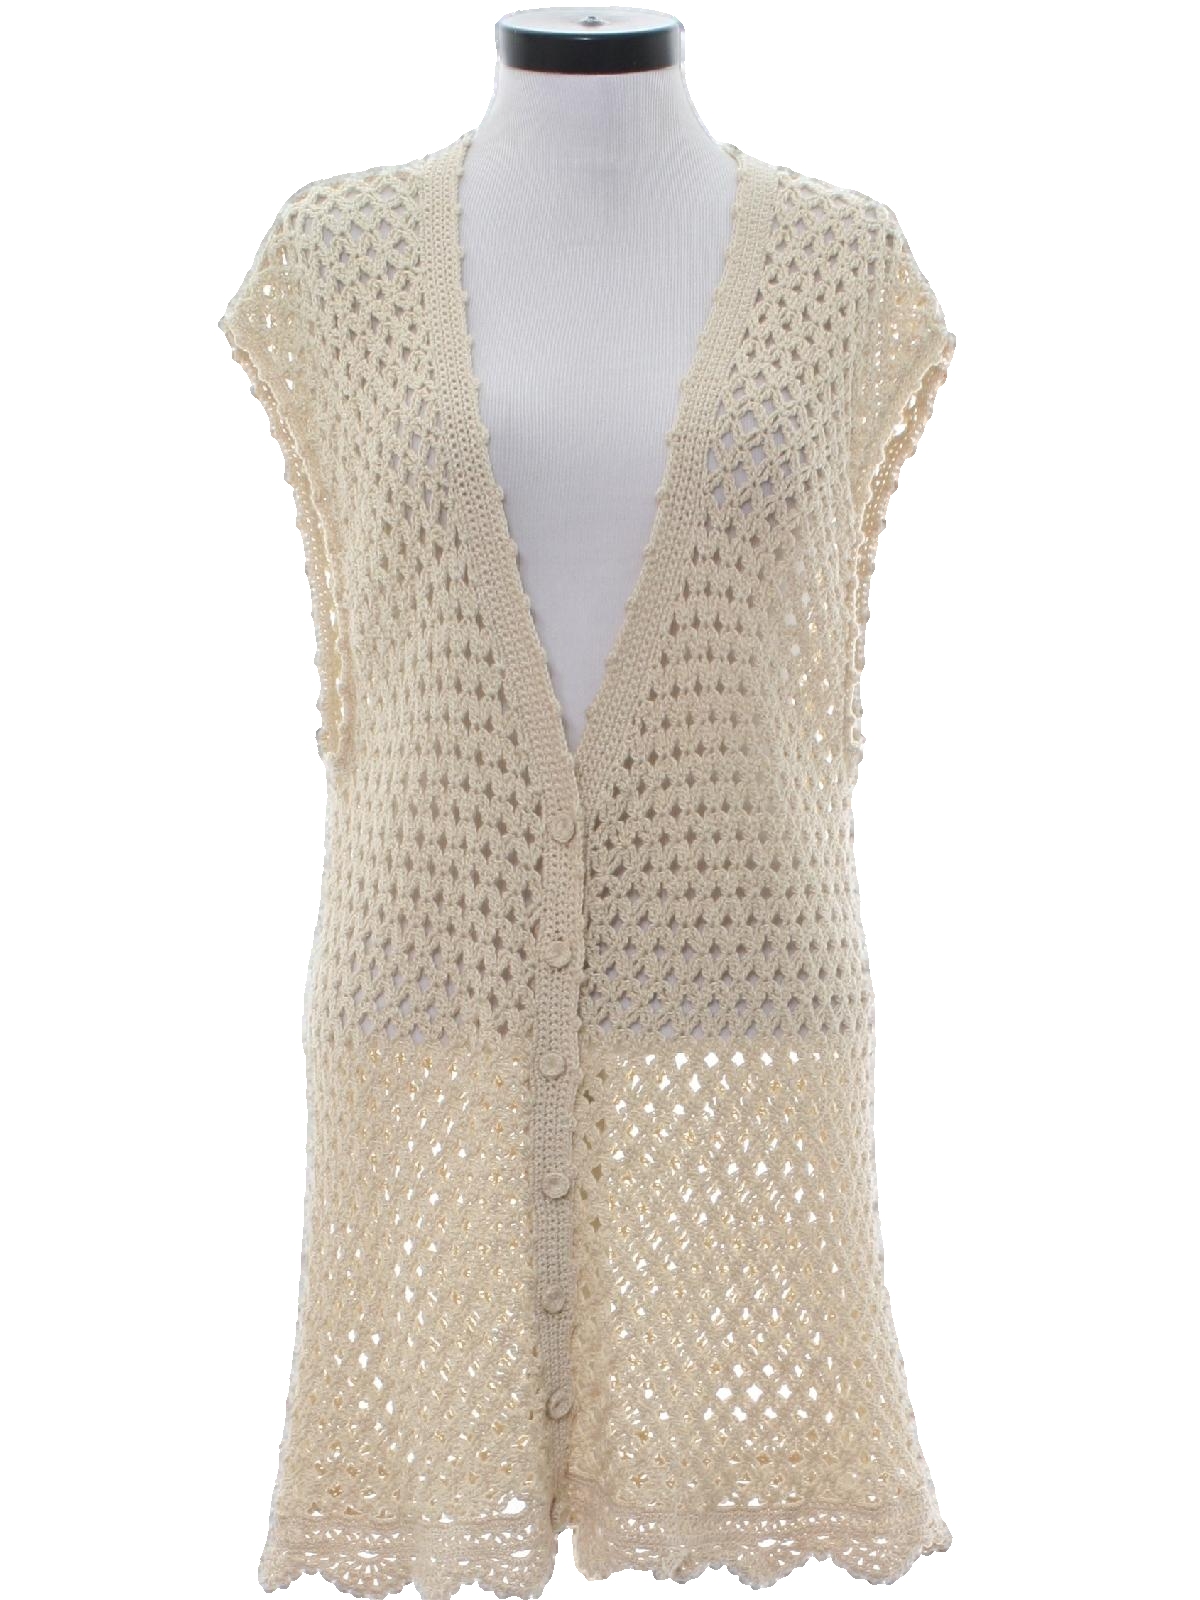 Retro 1980's Vest: 80s -No Label- Womens ecru background cotton yarn ...